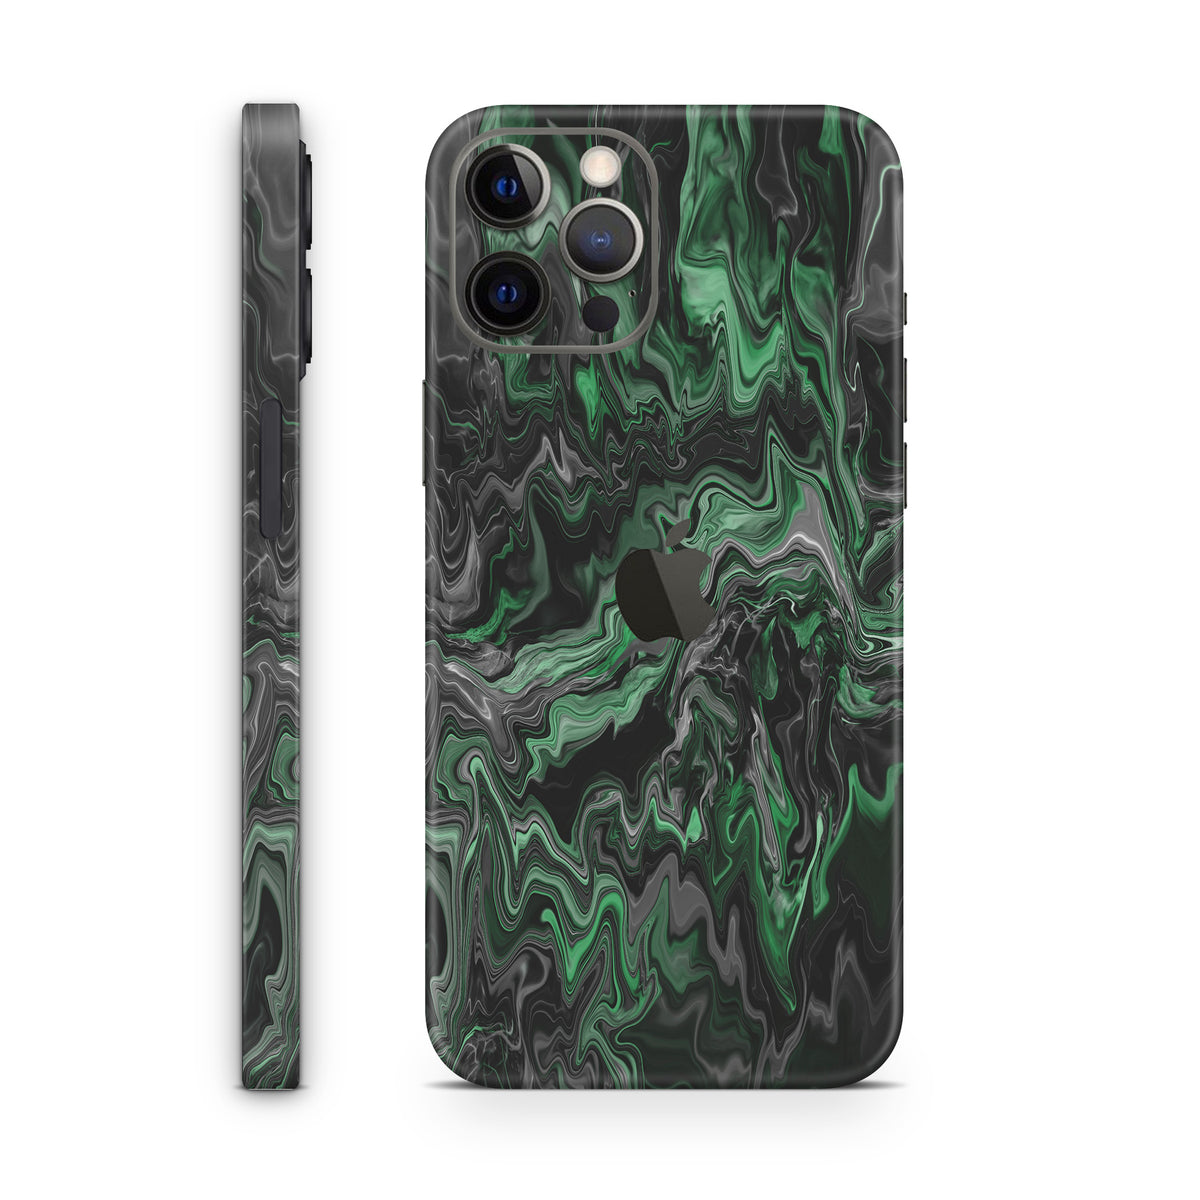 Emerald (iPhone Skin)